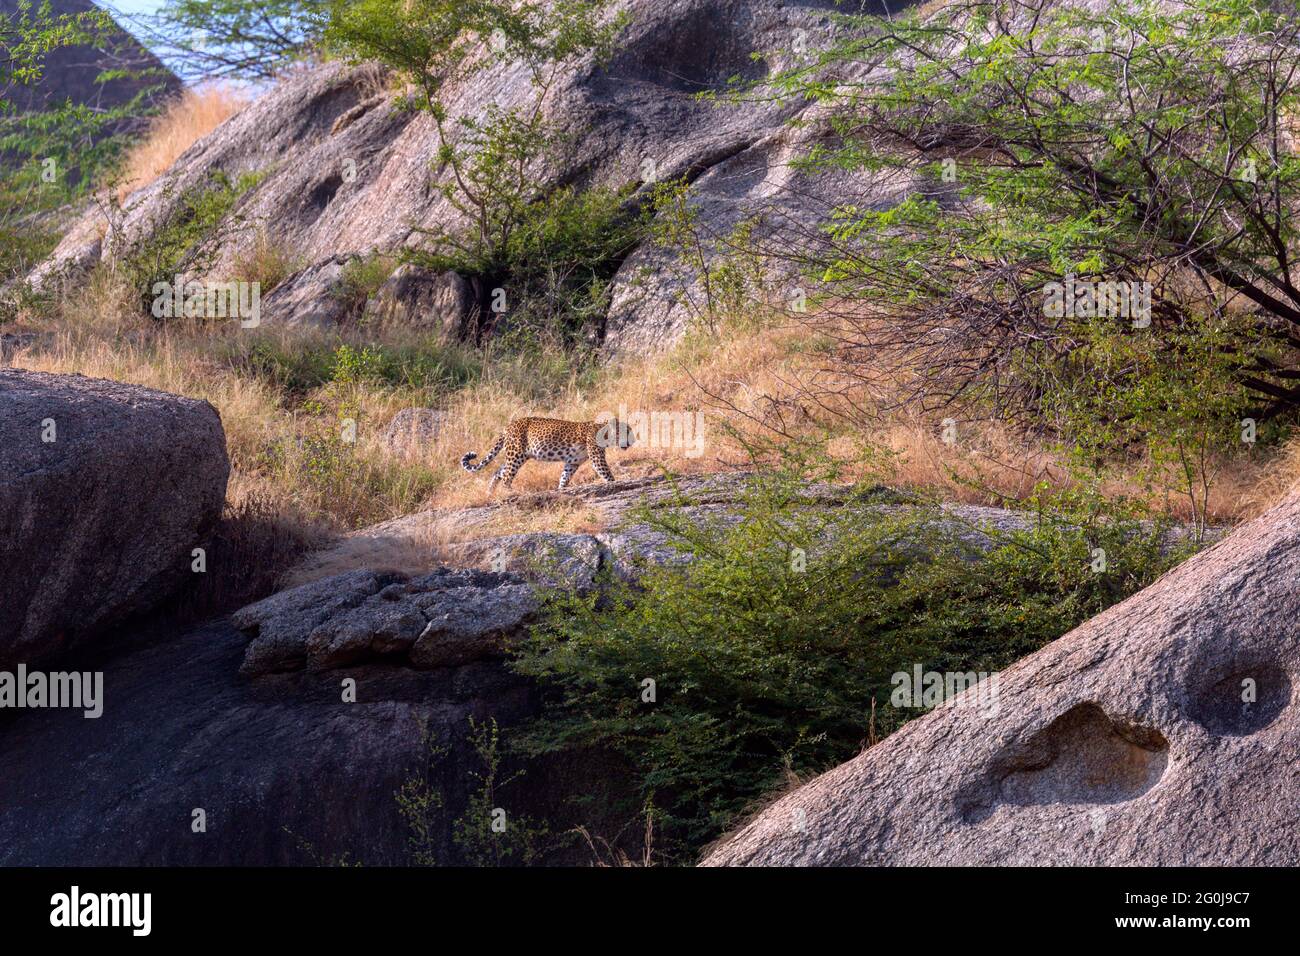 Indian leopard or Panthera pardus fusca in Aravalli hills region Jawai Bera Rajasthan India Stock Photo